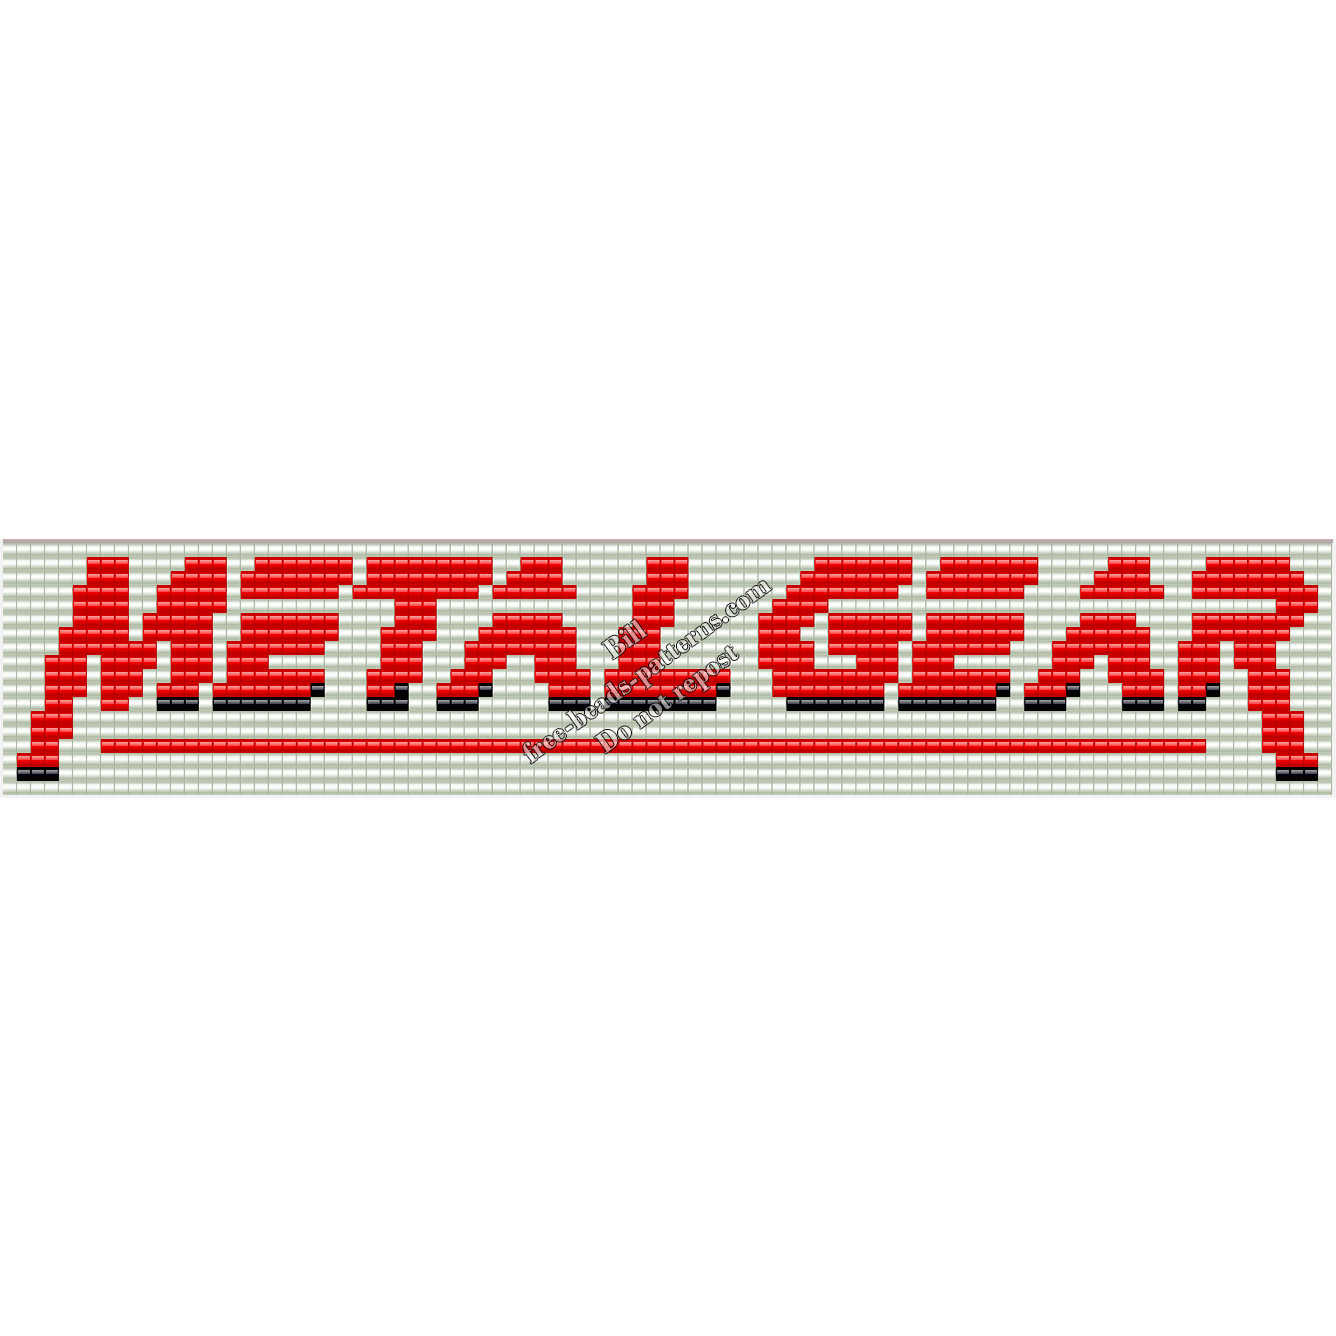 Metal Gear Solid 1 perler beads hama beads iron beads logo (2)